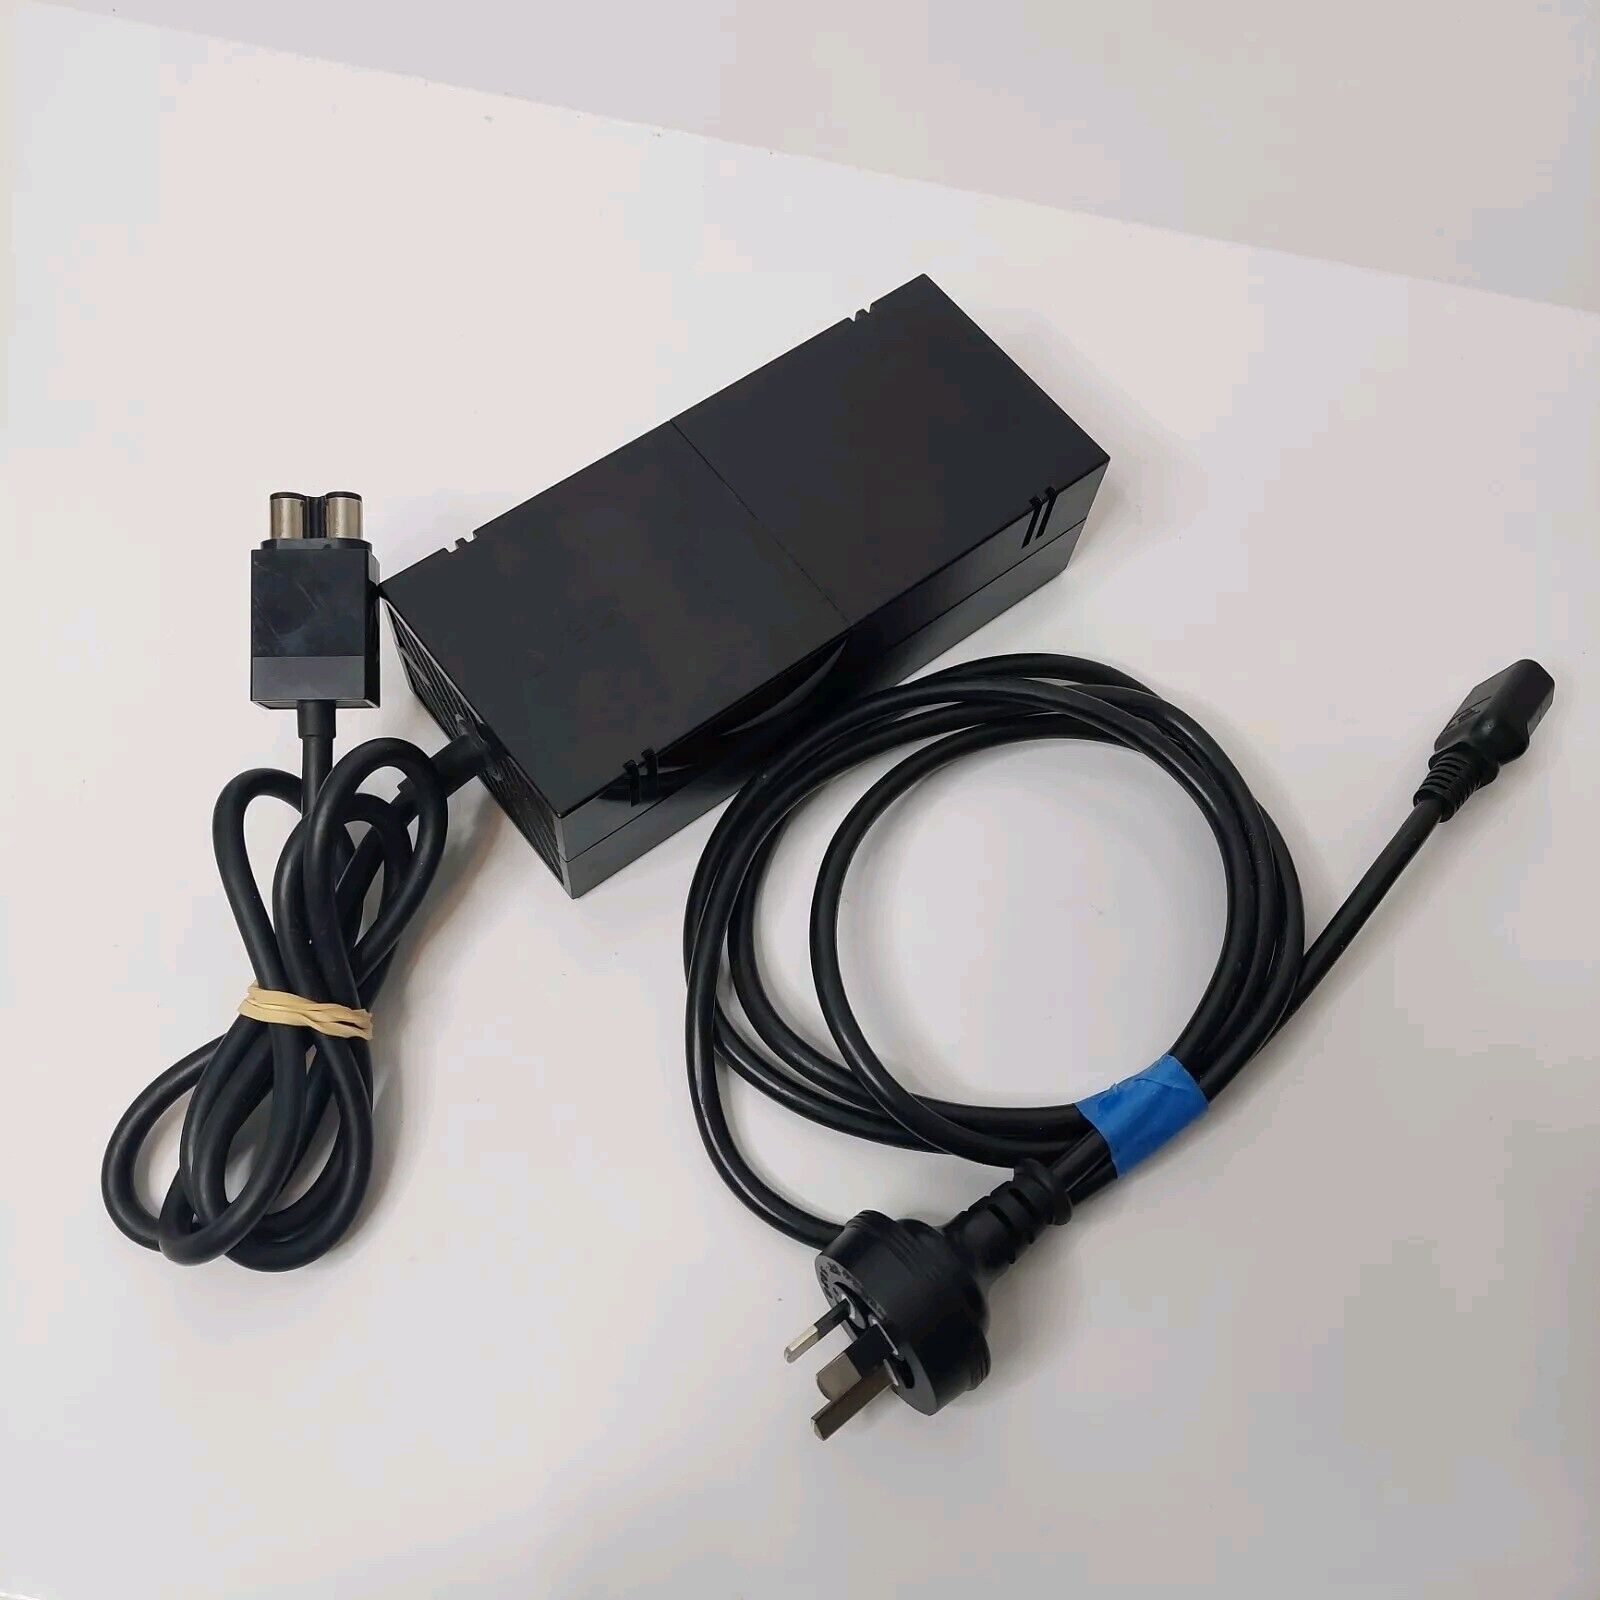 Genuine Microsoft Xbox One Power Supply Model: A13-203N1A Brick Adapter